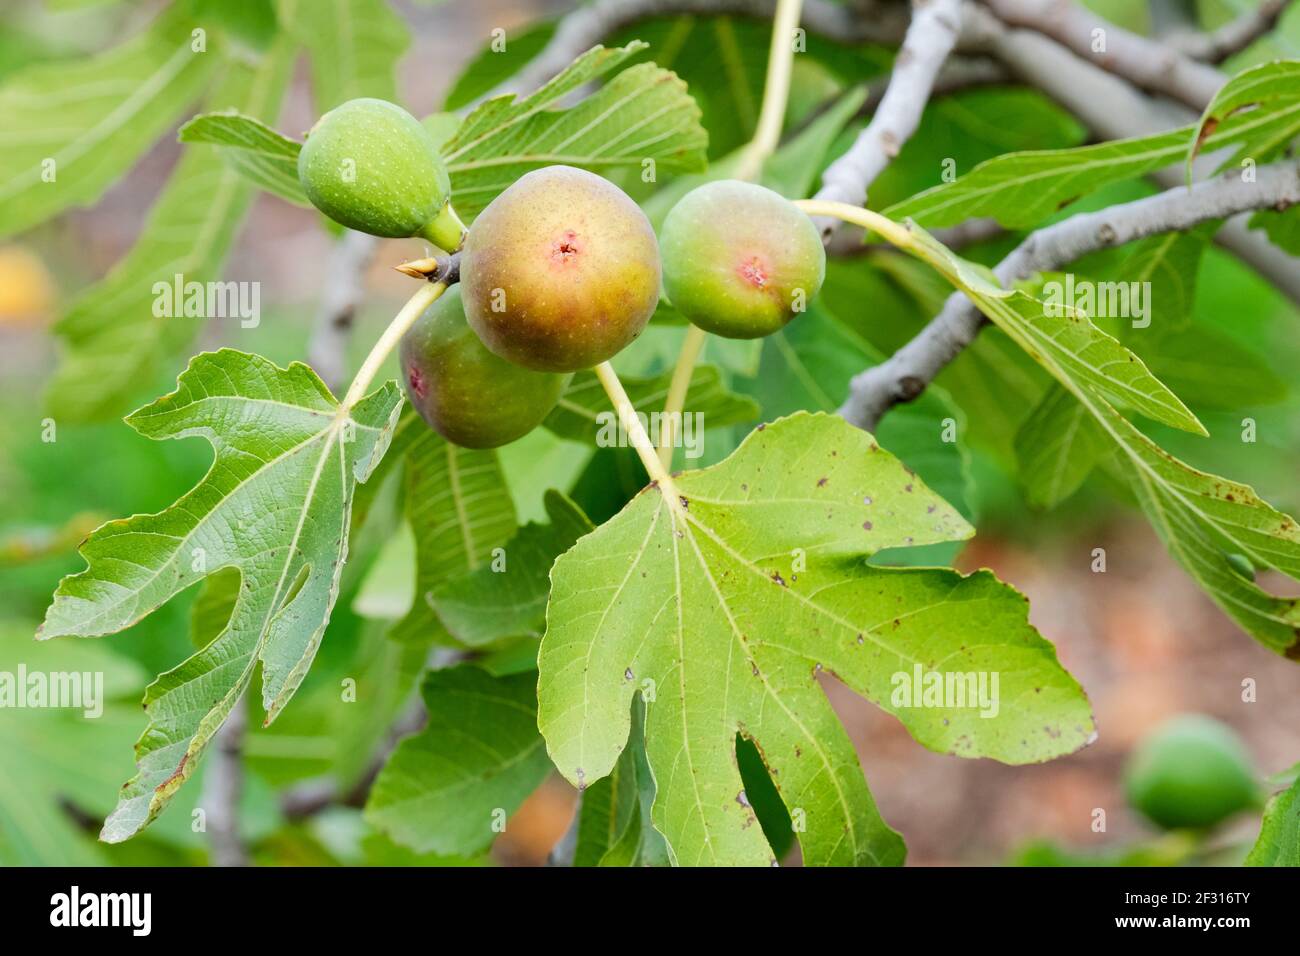 Ficus carica 'Bourjasotte Grise'. Fruta madurando/ creciendo en un árbol de higuera Foto de stock